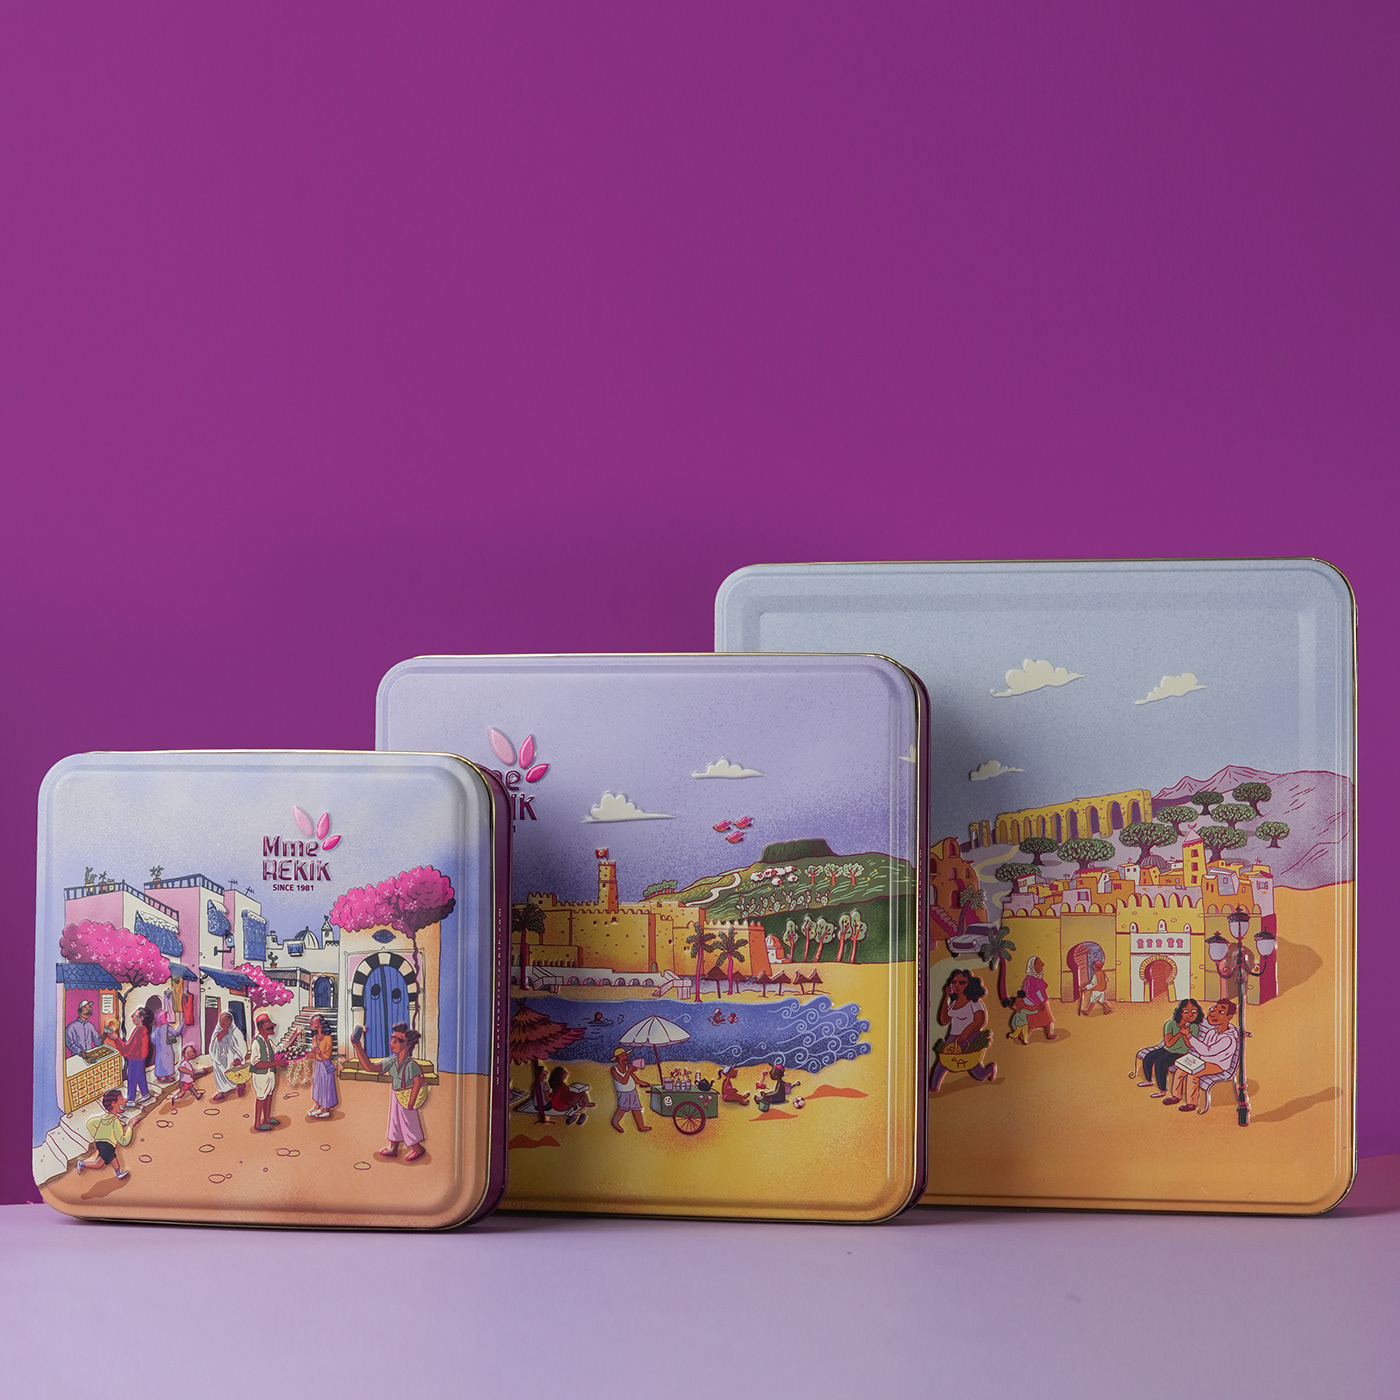 Packaging illustrations think create Sfax tunisia brand identity monuments pastry visual identity METALIC BOX